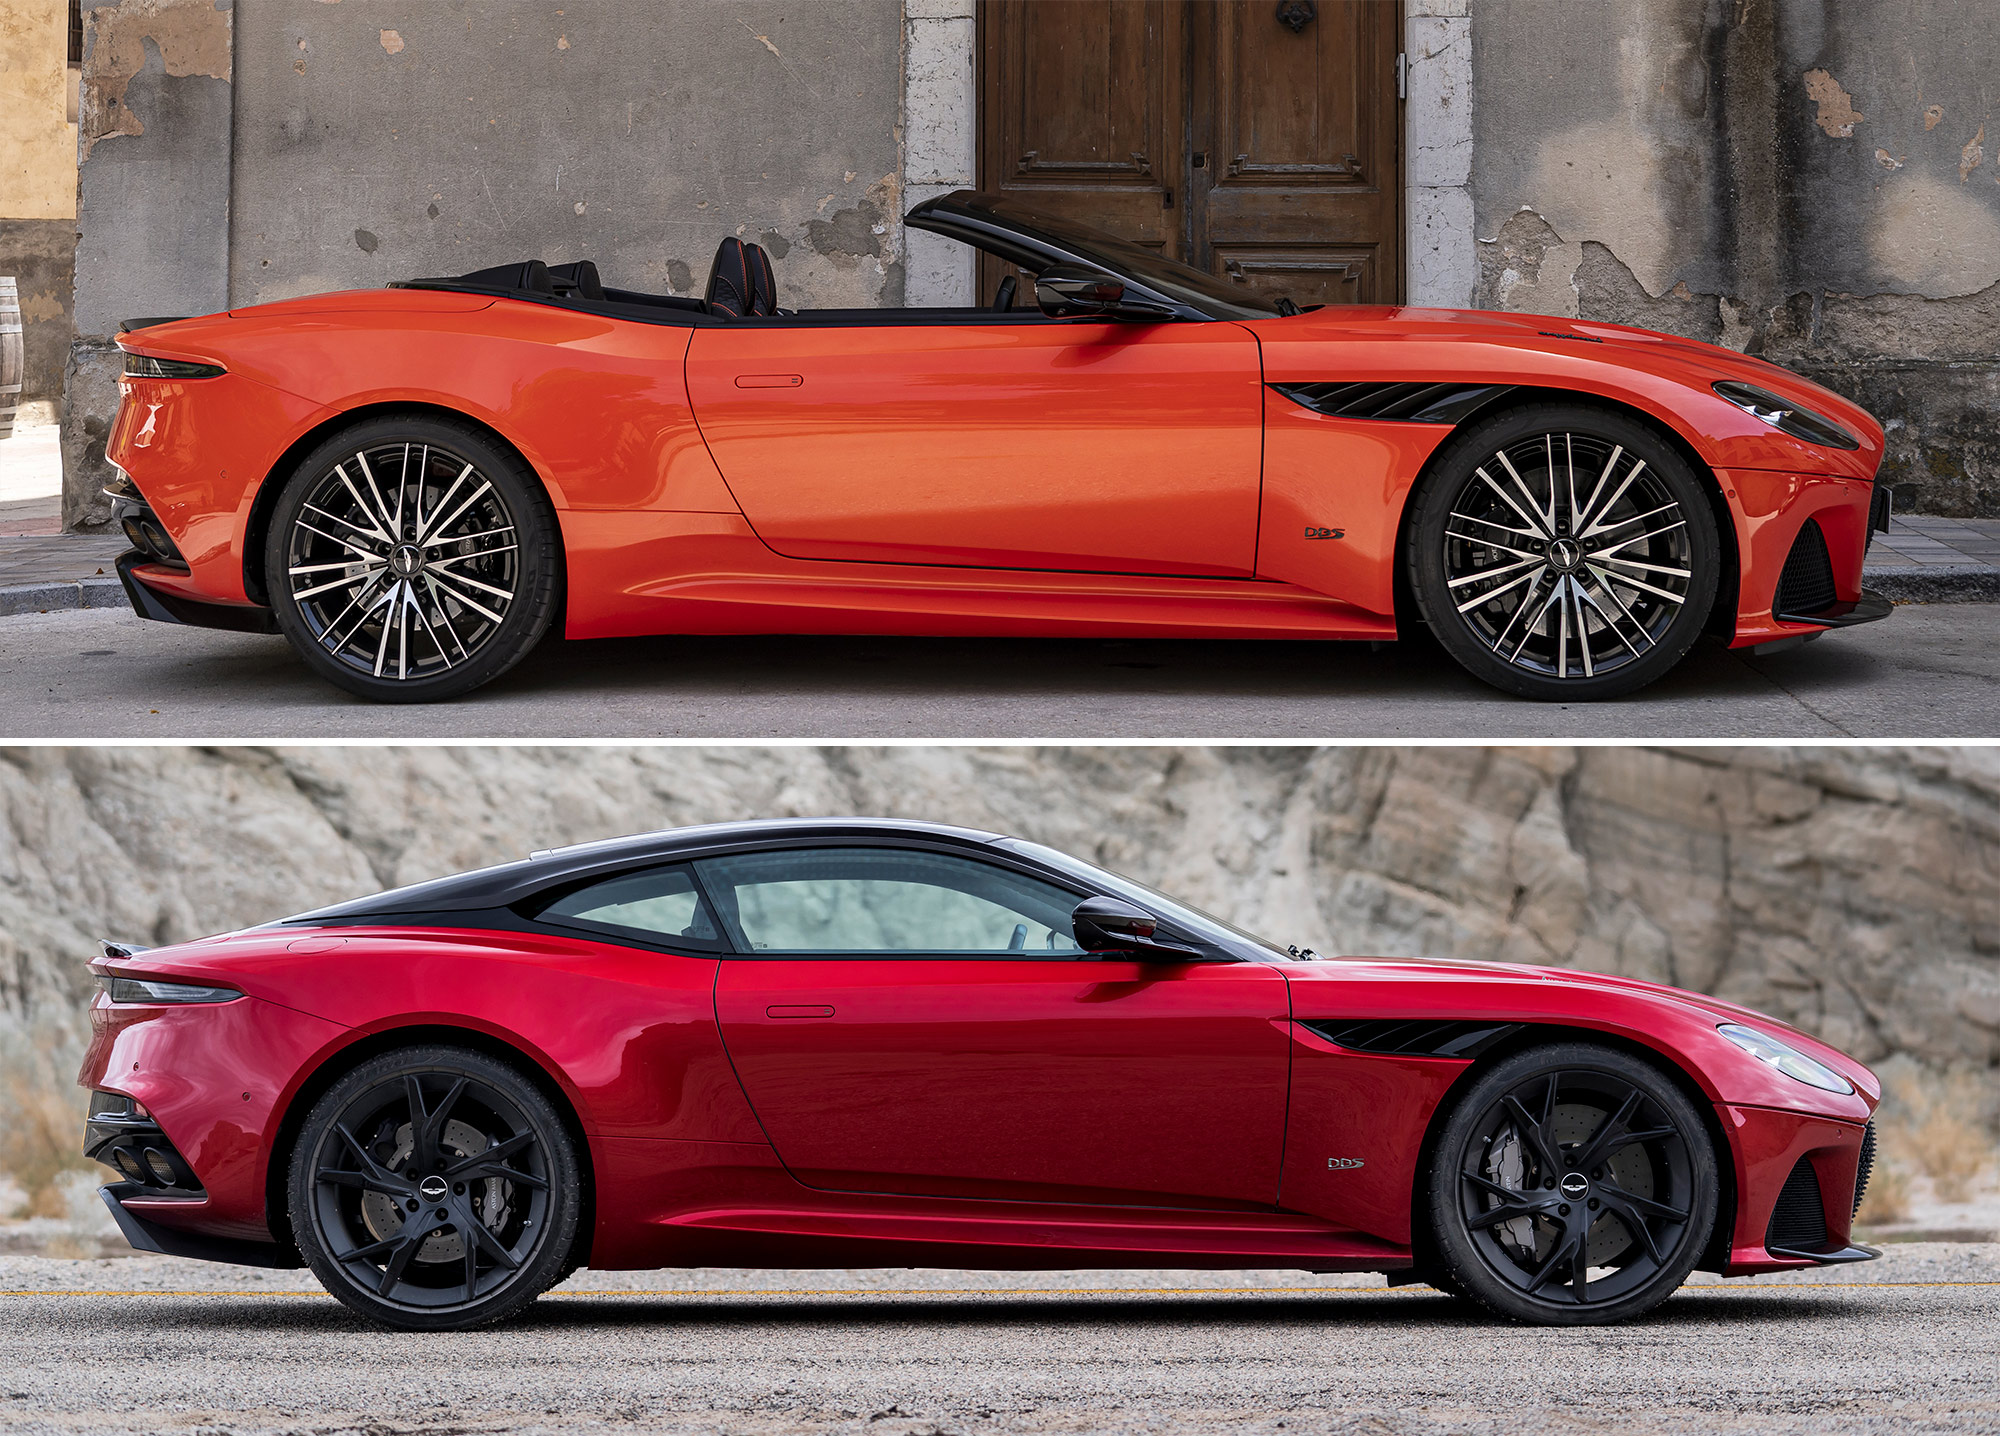 Aston Martin DBS coupe vs Volante convertible side-by-side comparison